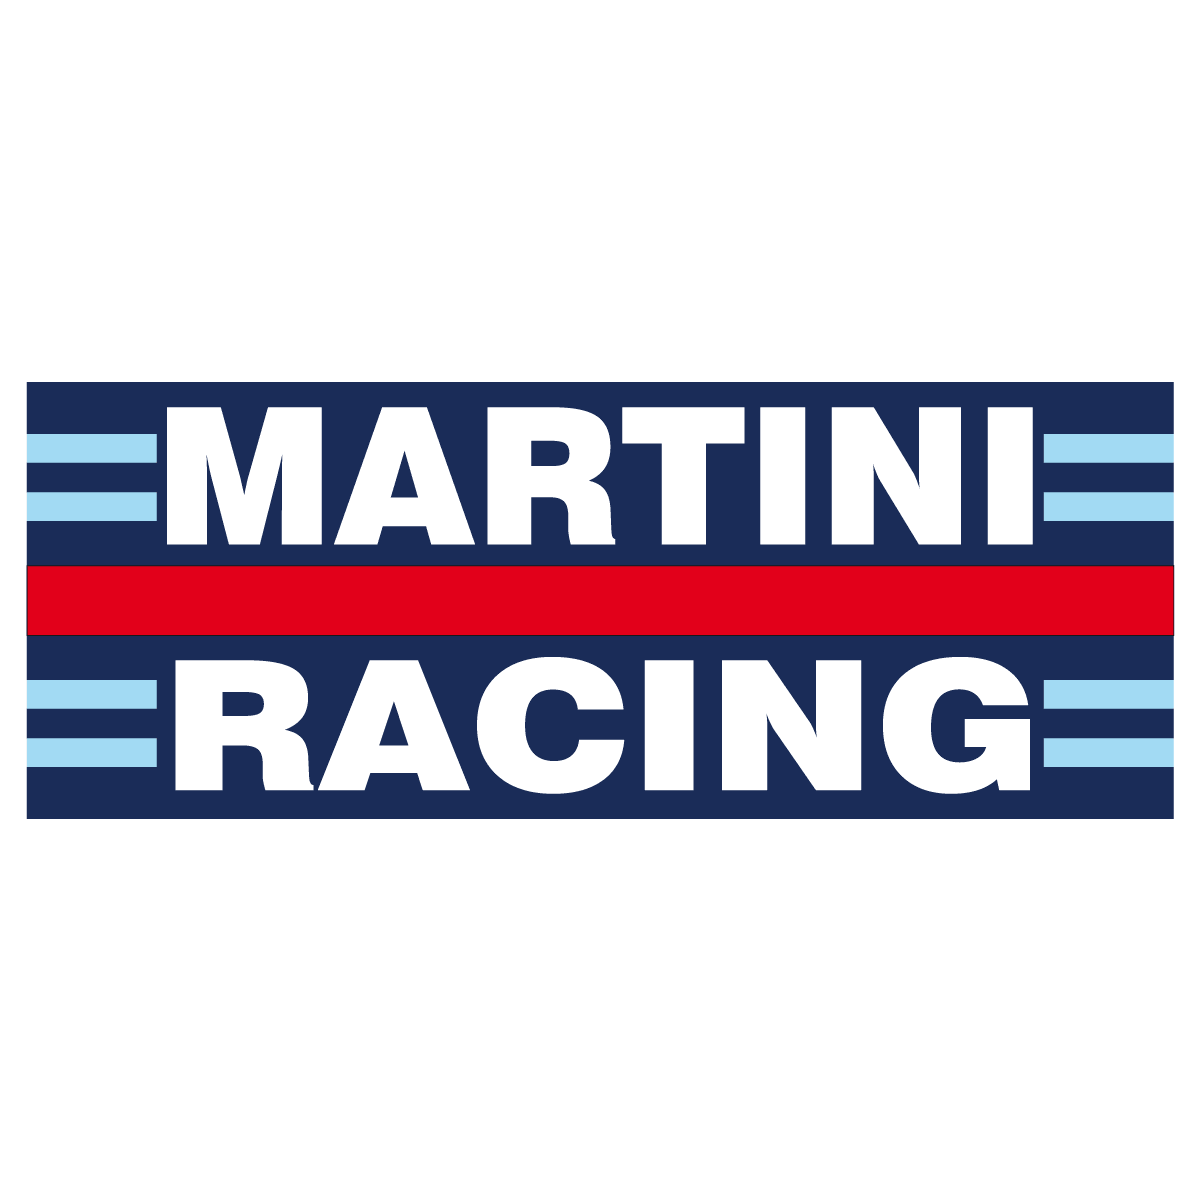 Aufkleber: Martini racing